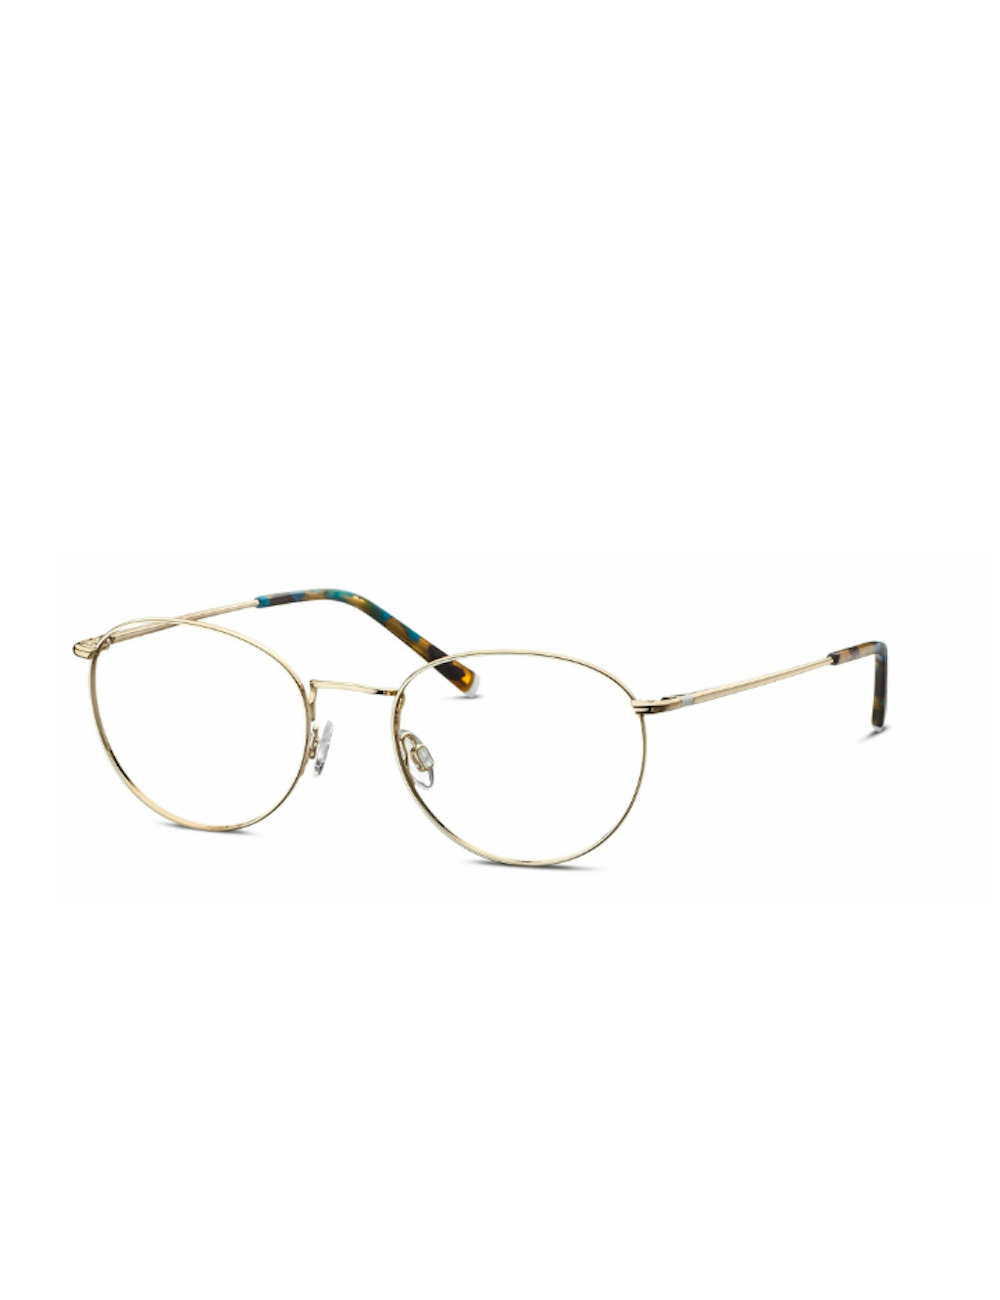 Humphrey's eyewear 582273 29 occhiali da vista rotondi in metallo